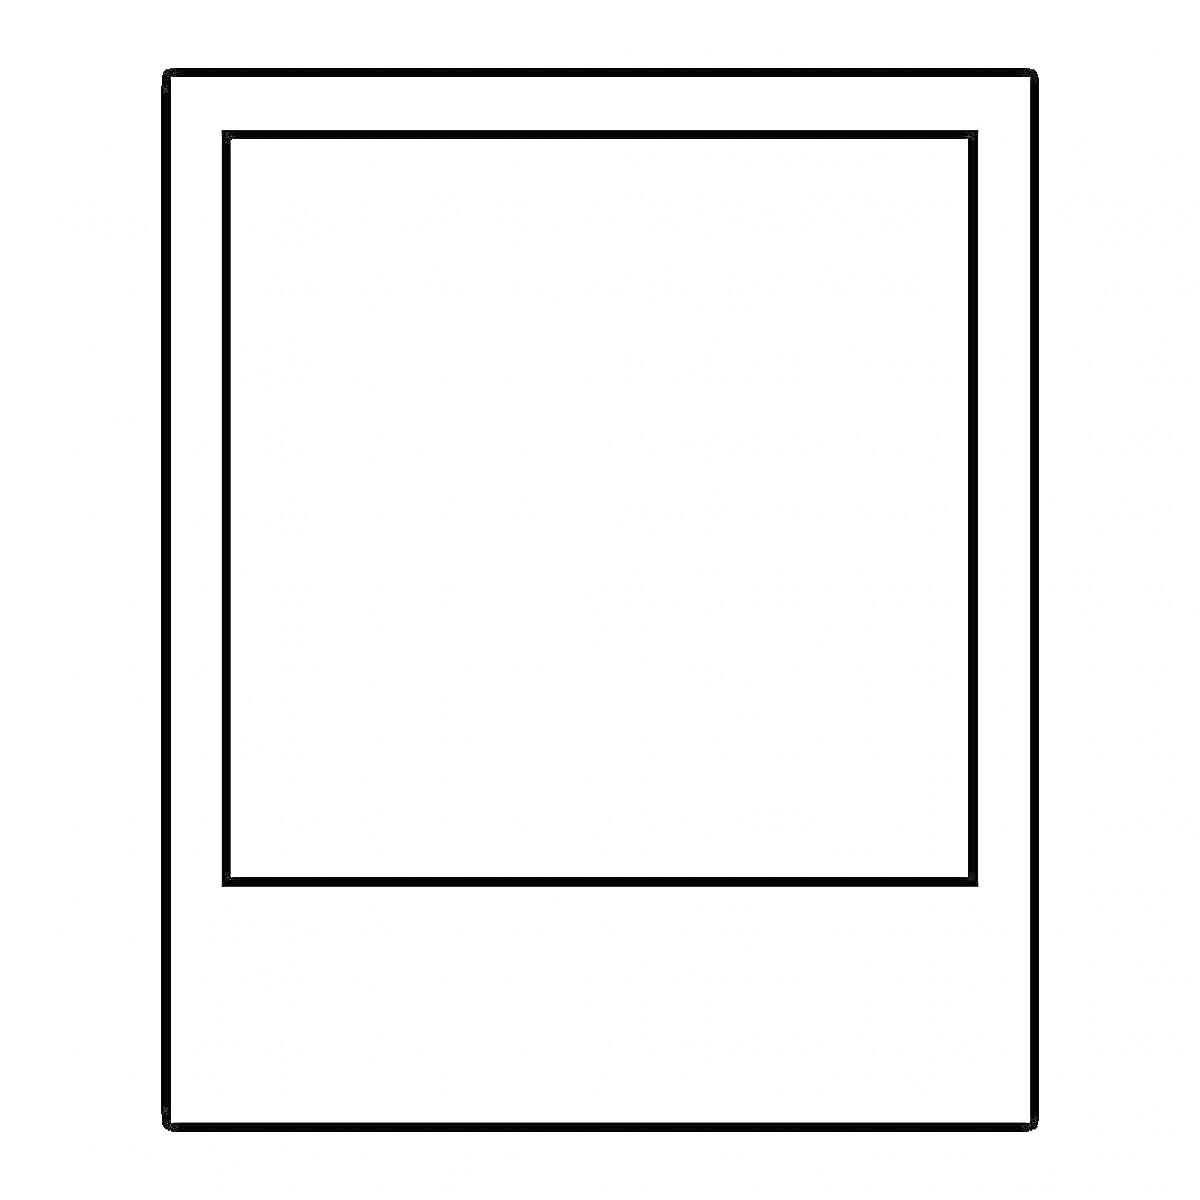 Раскраска Границы квадрата на фоне полароидной рамки